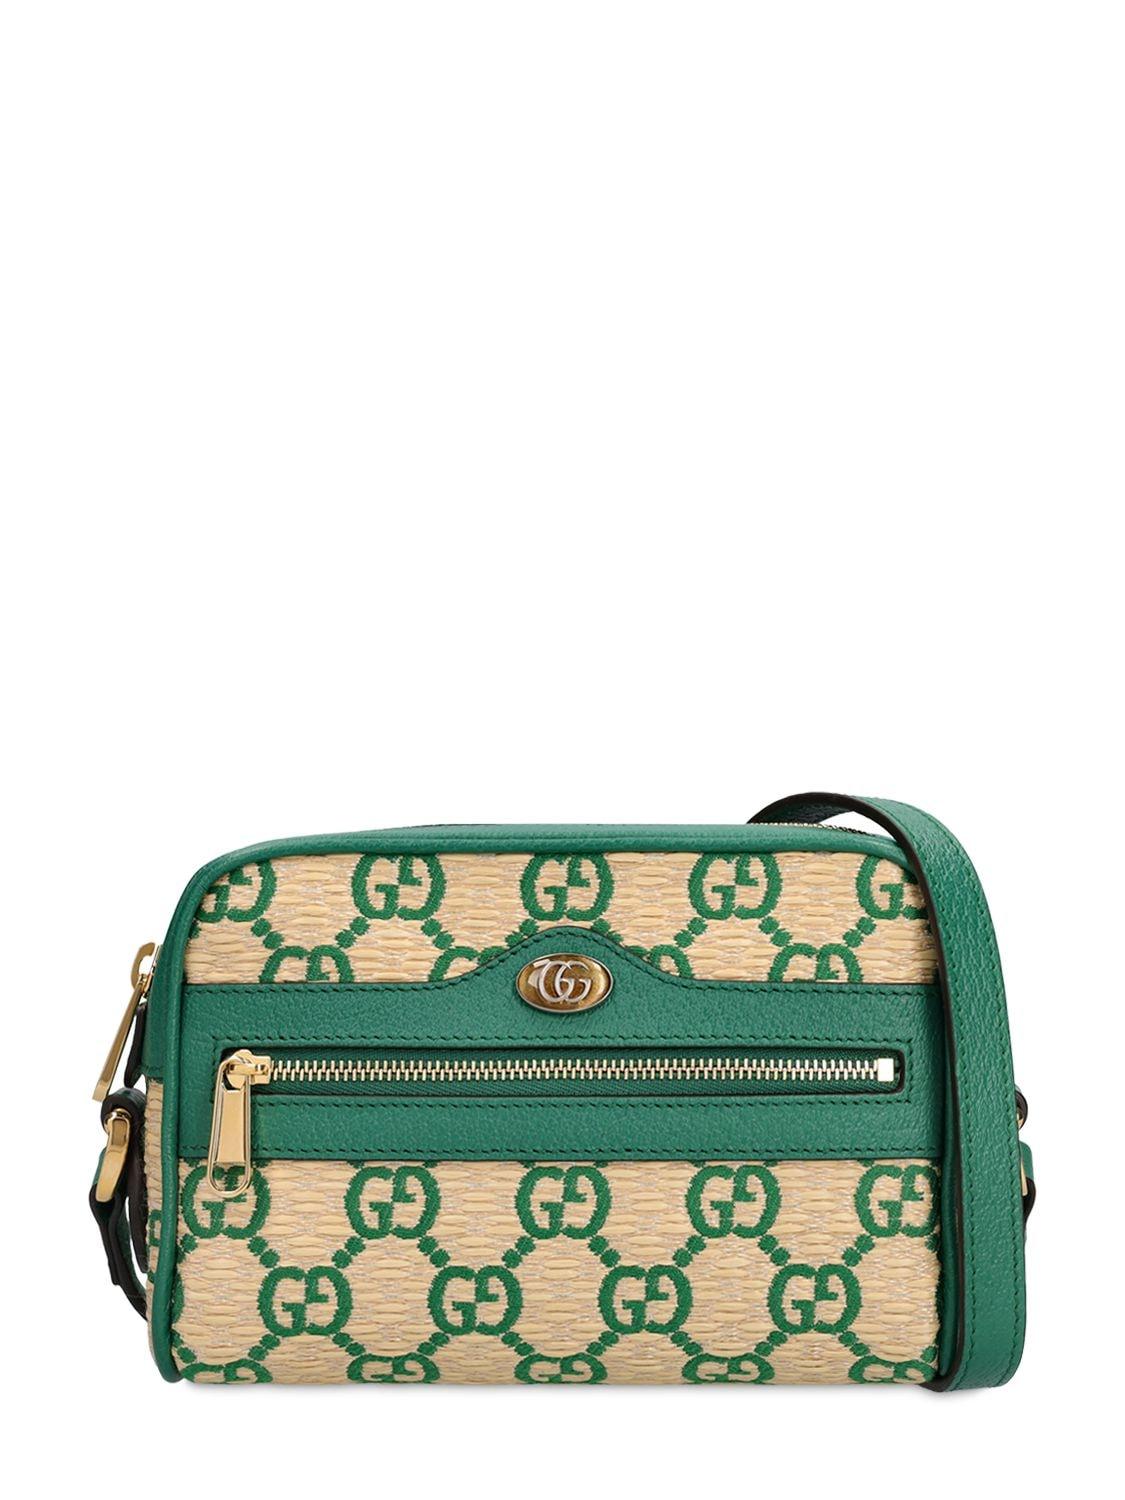 Gucci Ophidia Gg-canvas Mini Crossbody Bag in Green for Men